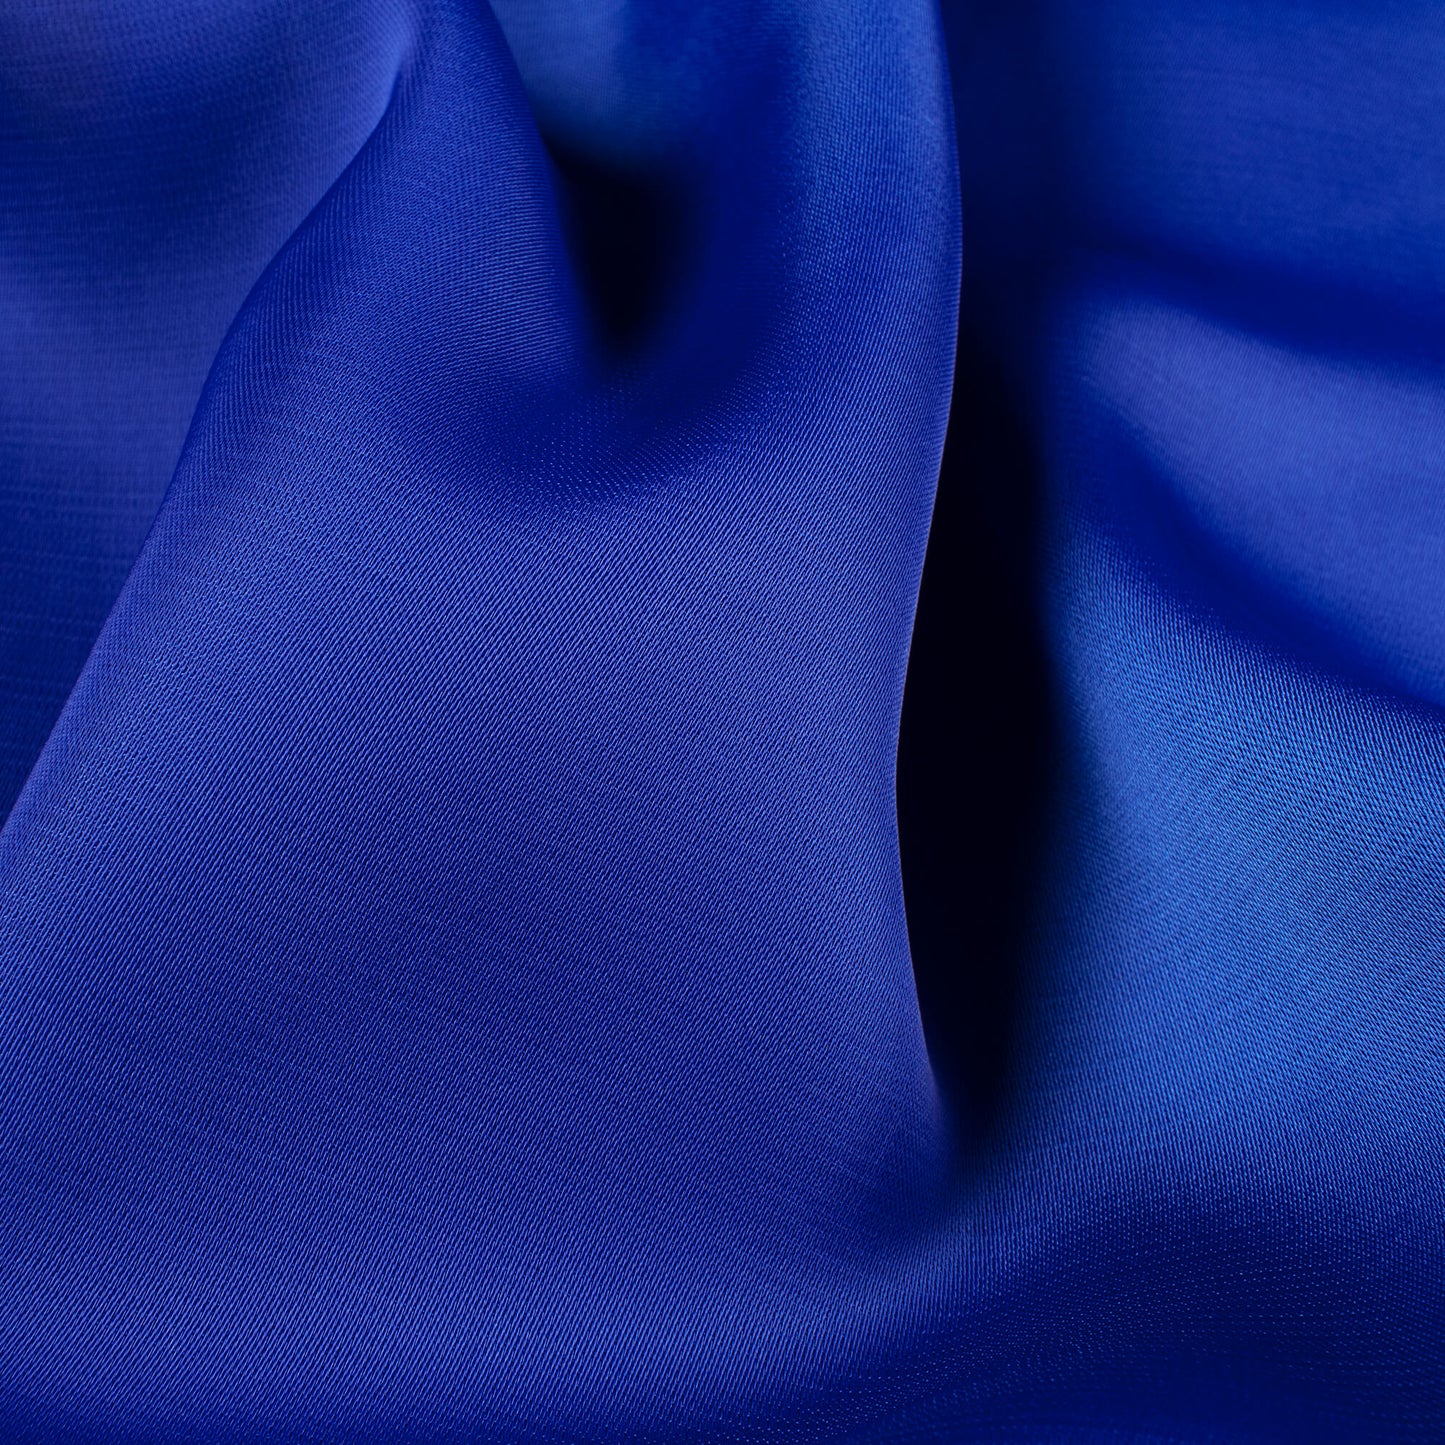 Royal Blue Plain Imported Satin Fabric